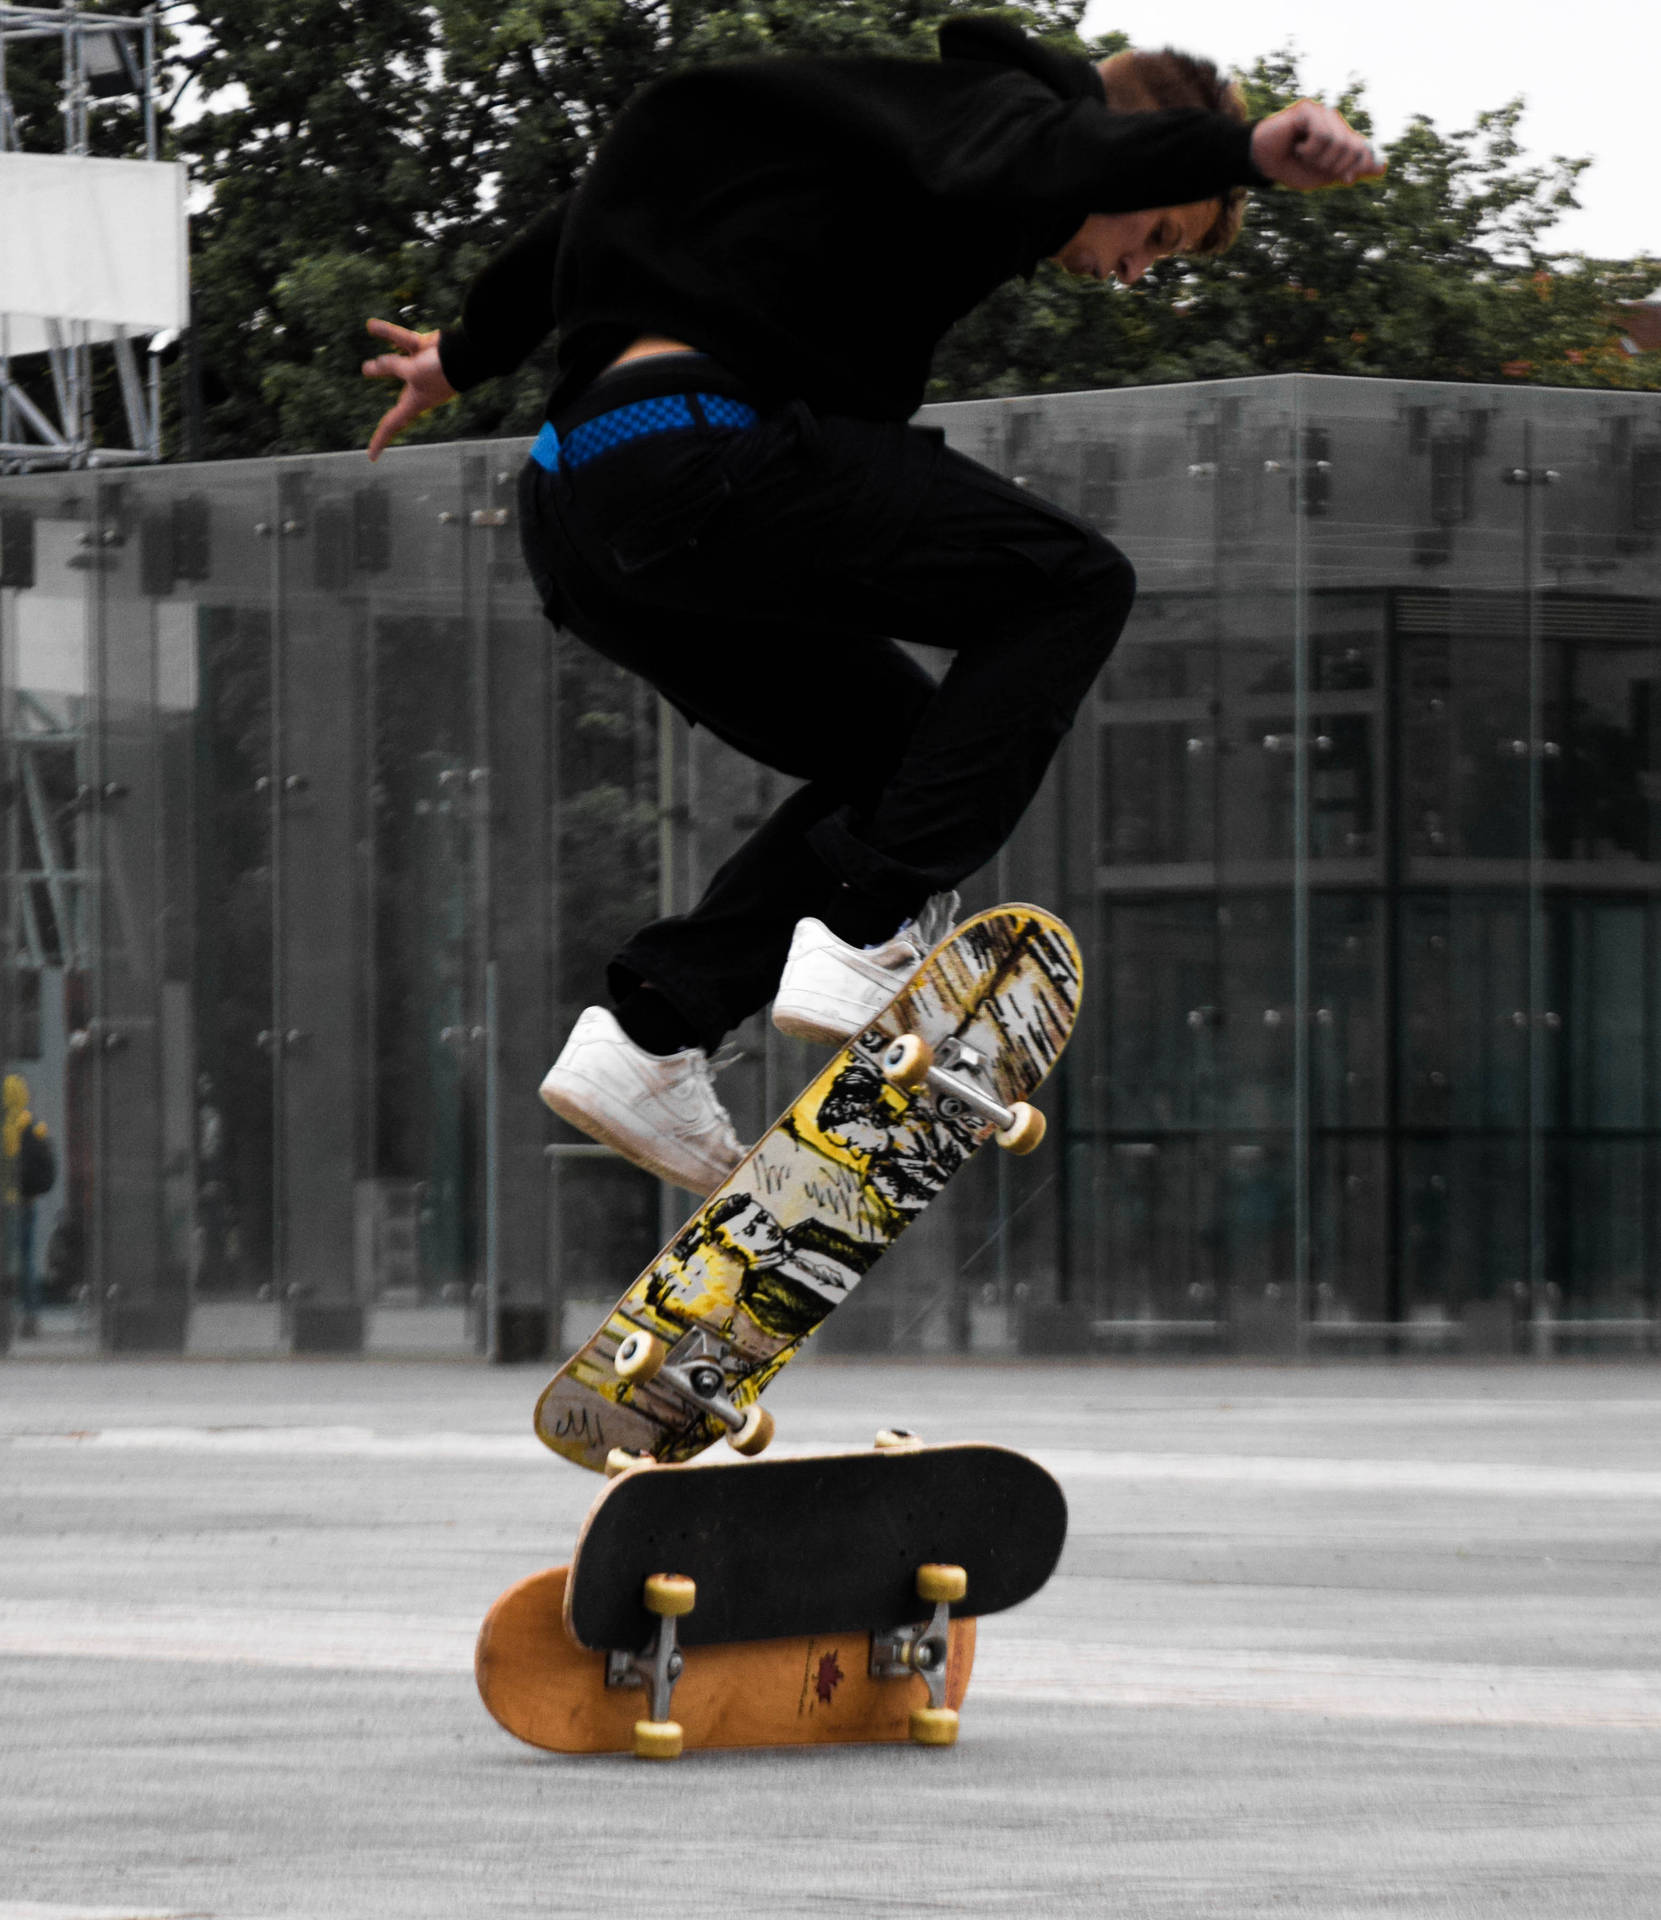 Ollie Trick On Skateboard Wallpaper